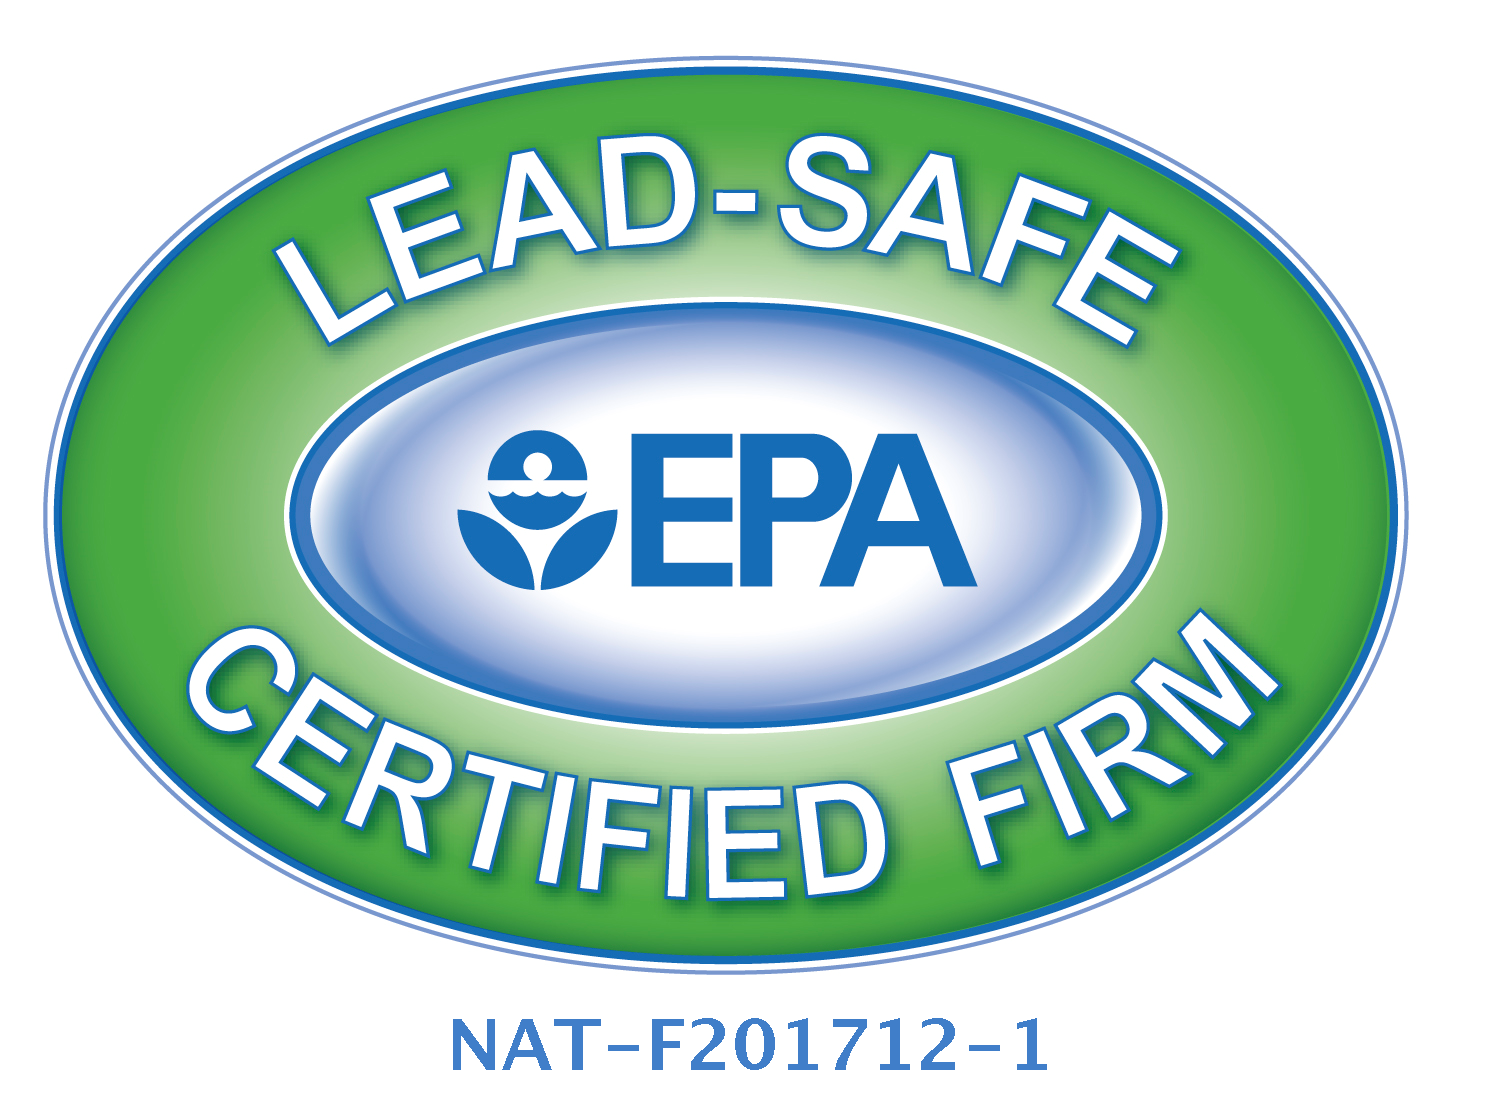 EPA Lead Safe Windows